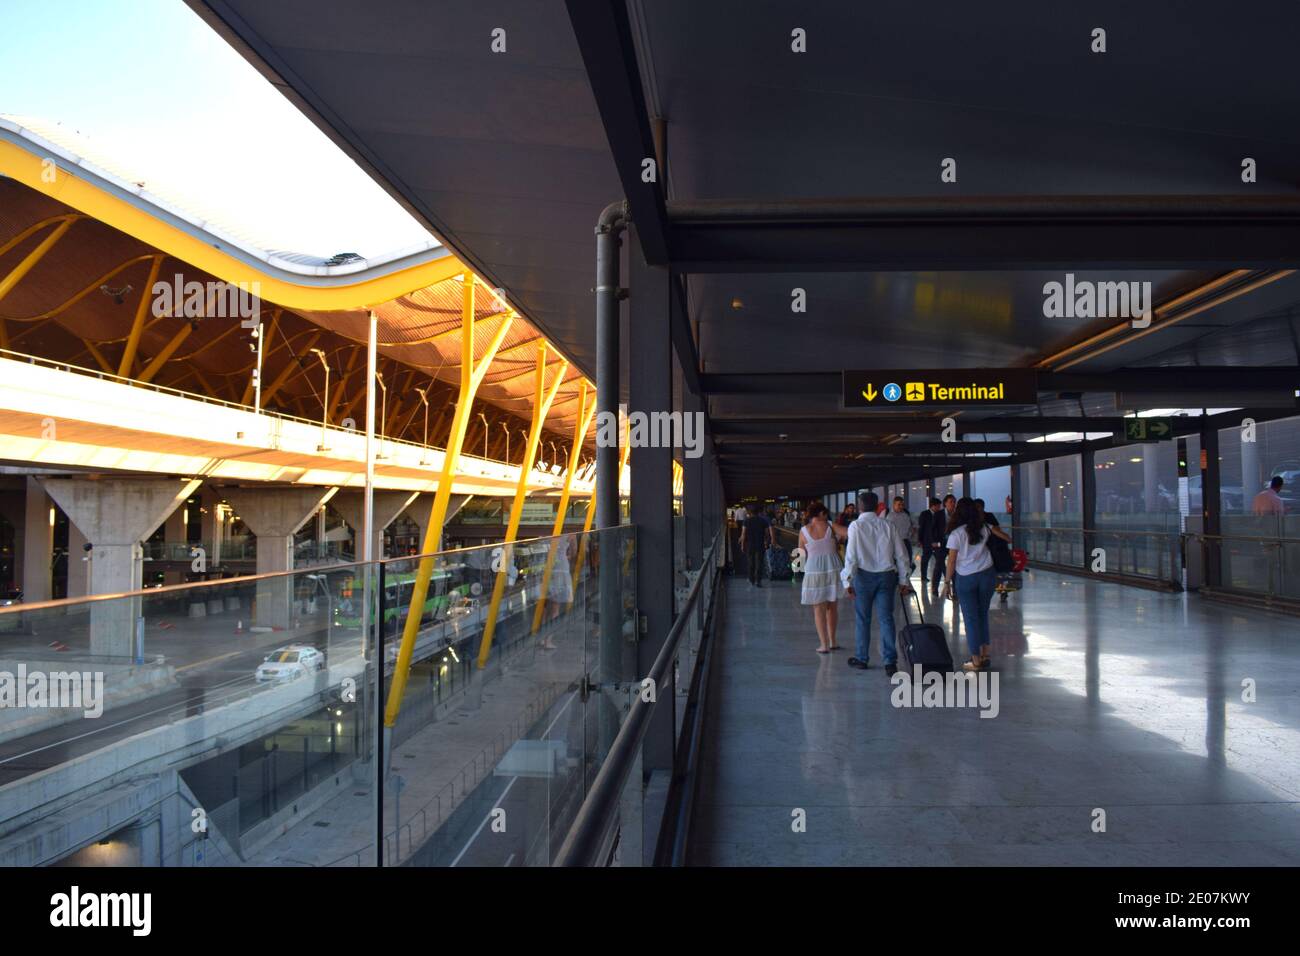 Aeroporto T4 Adolfo Suárez-Madrid Barajas Foto Stock